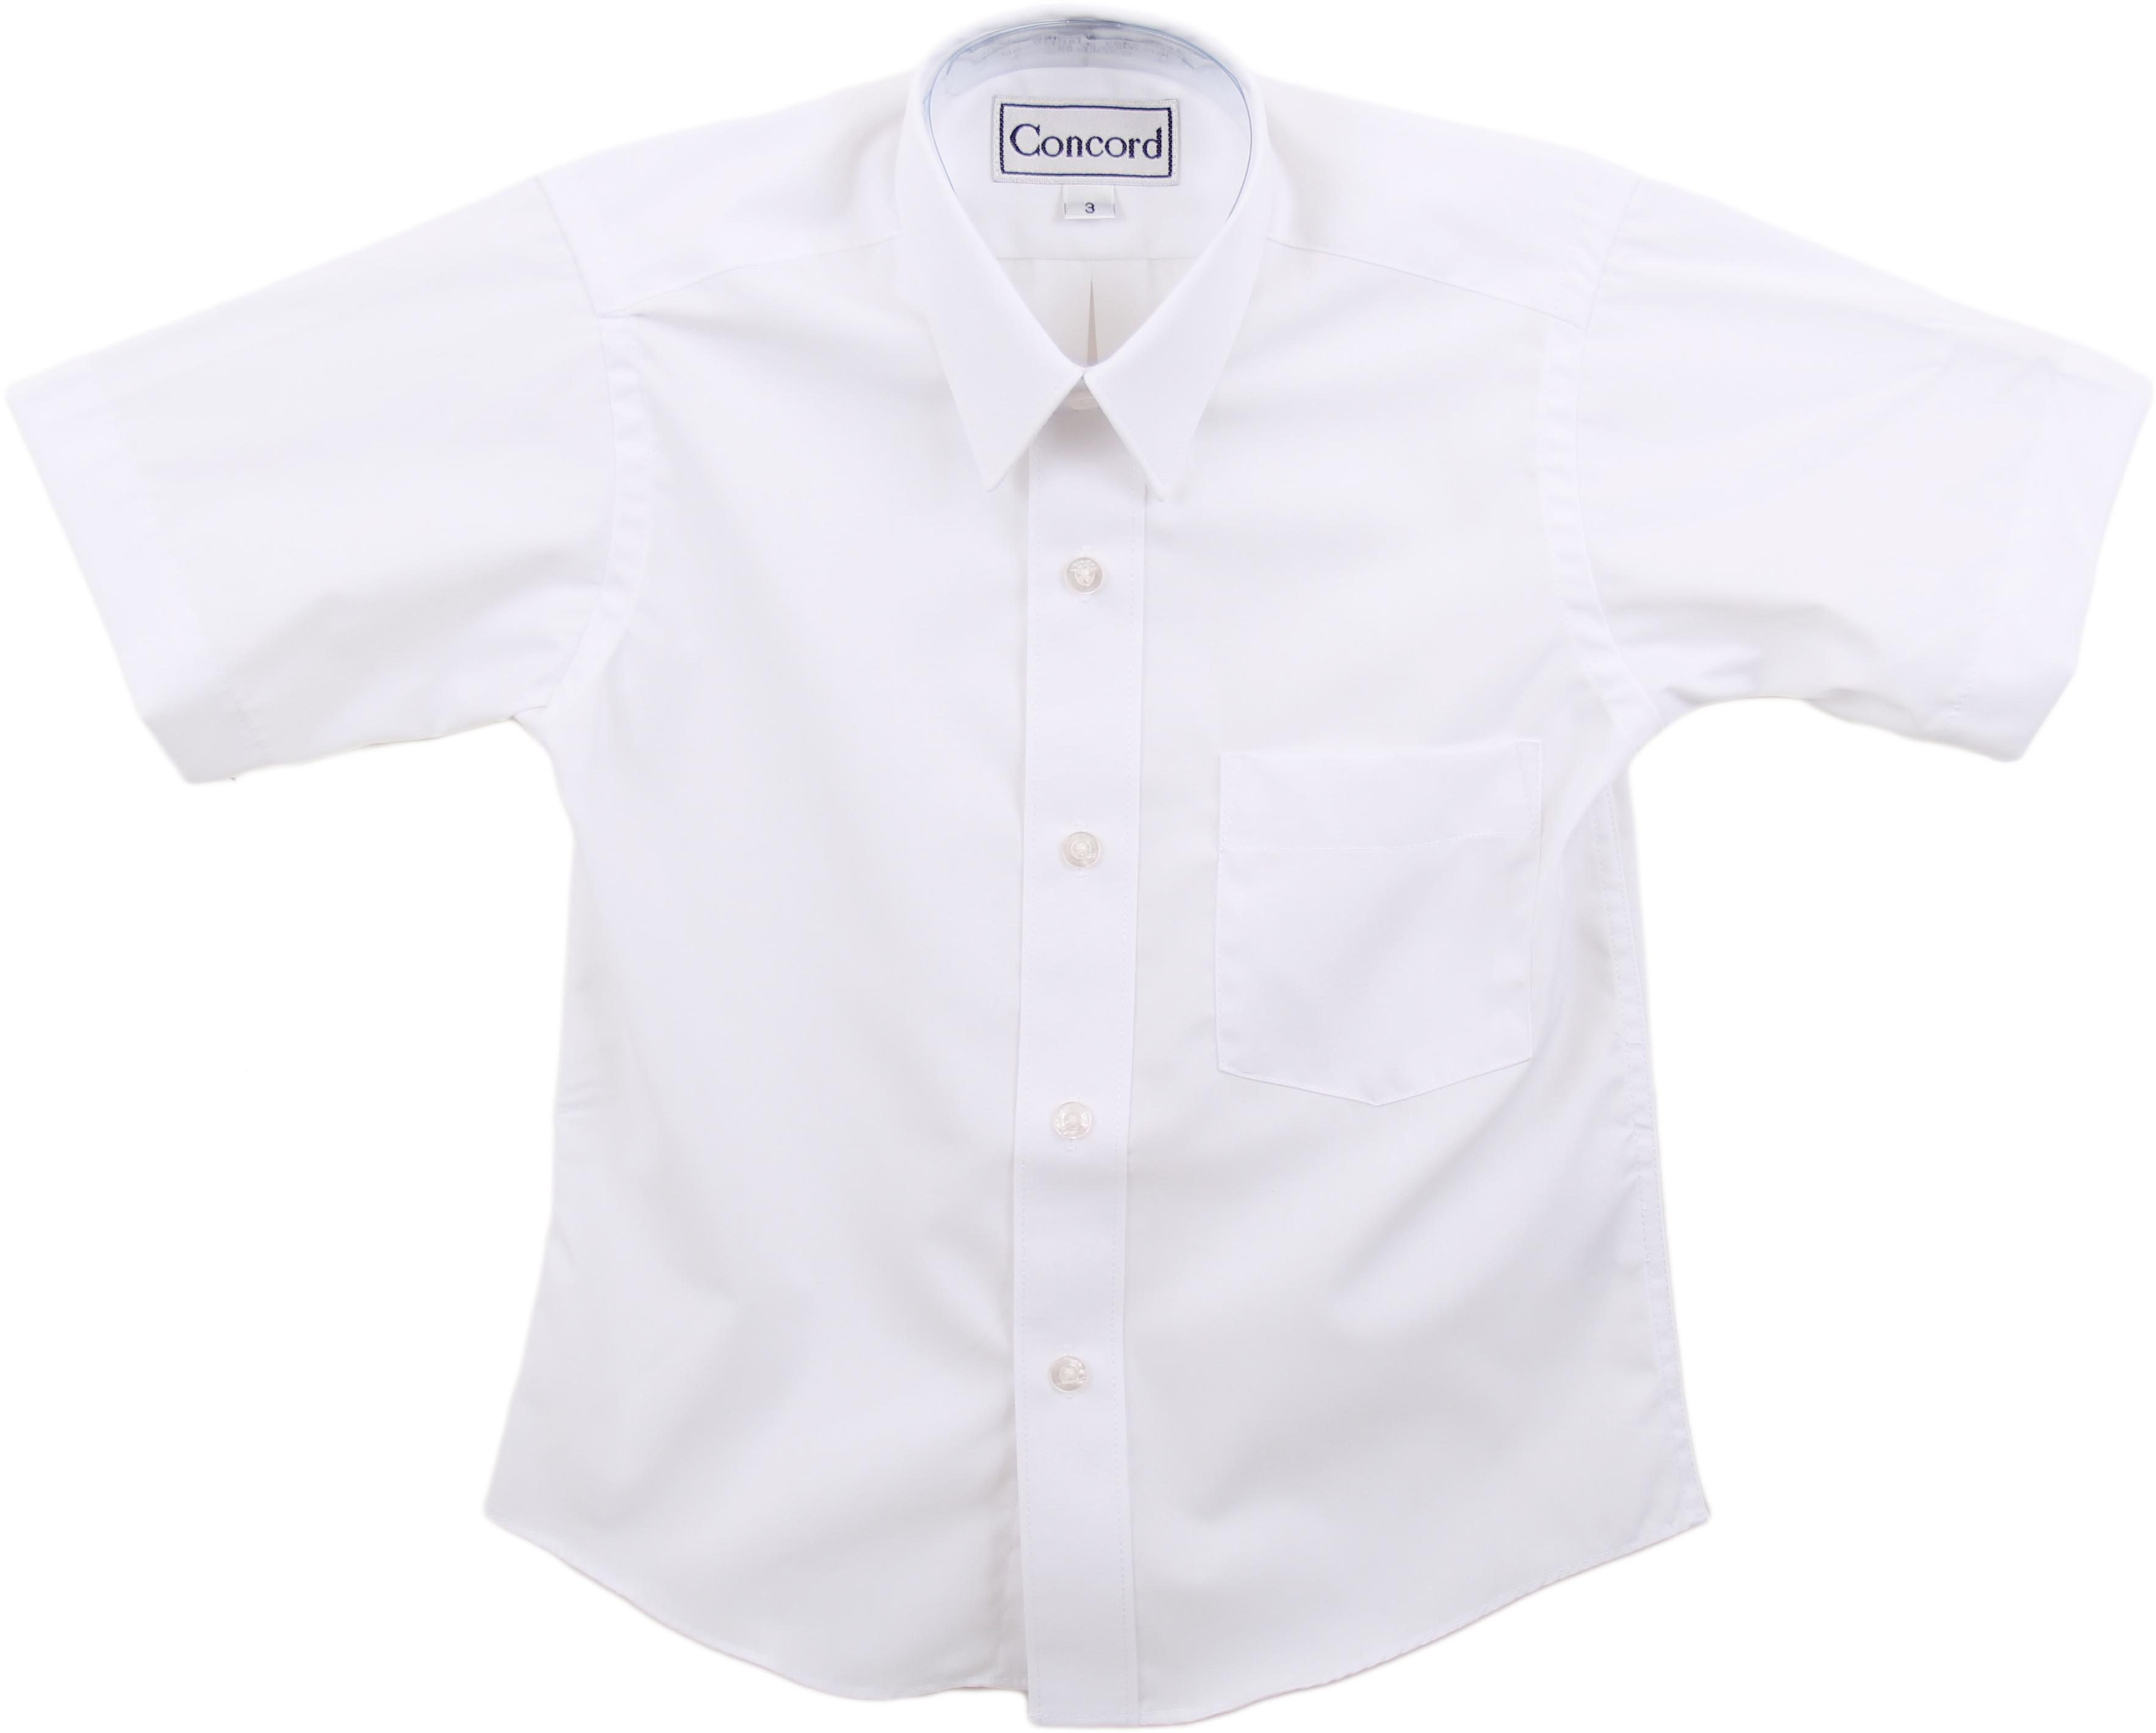 Concord Boys Short Sleeve White Dress Shirt | eBay